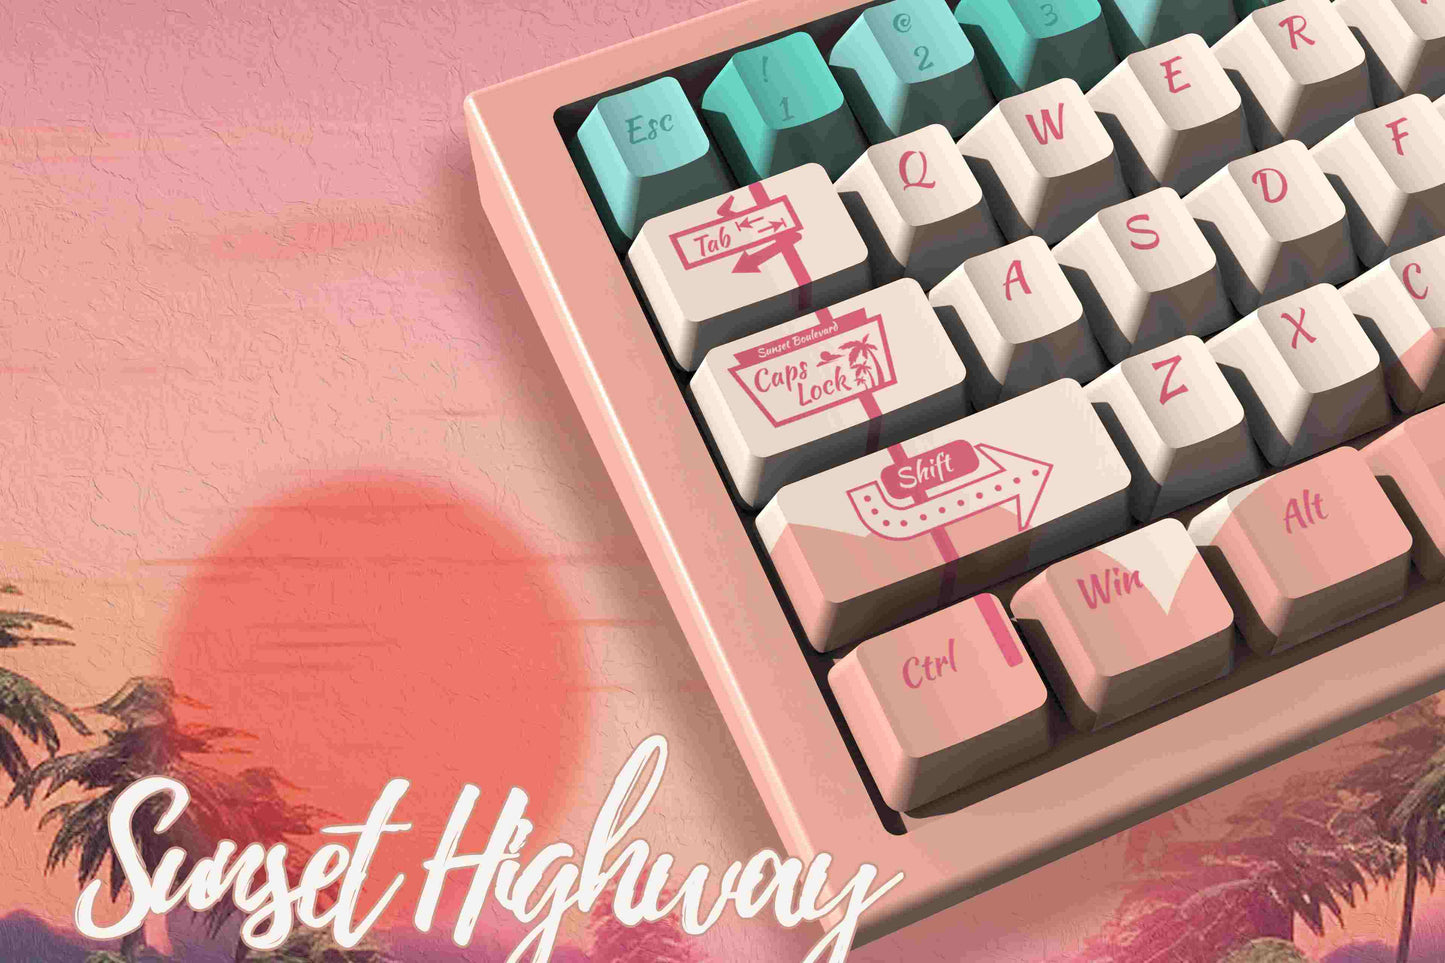 Custom Keycaps PBT Sunset Highway keycaps Set 